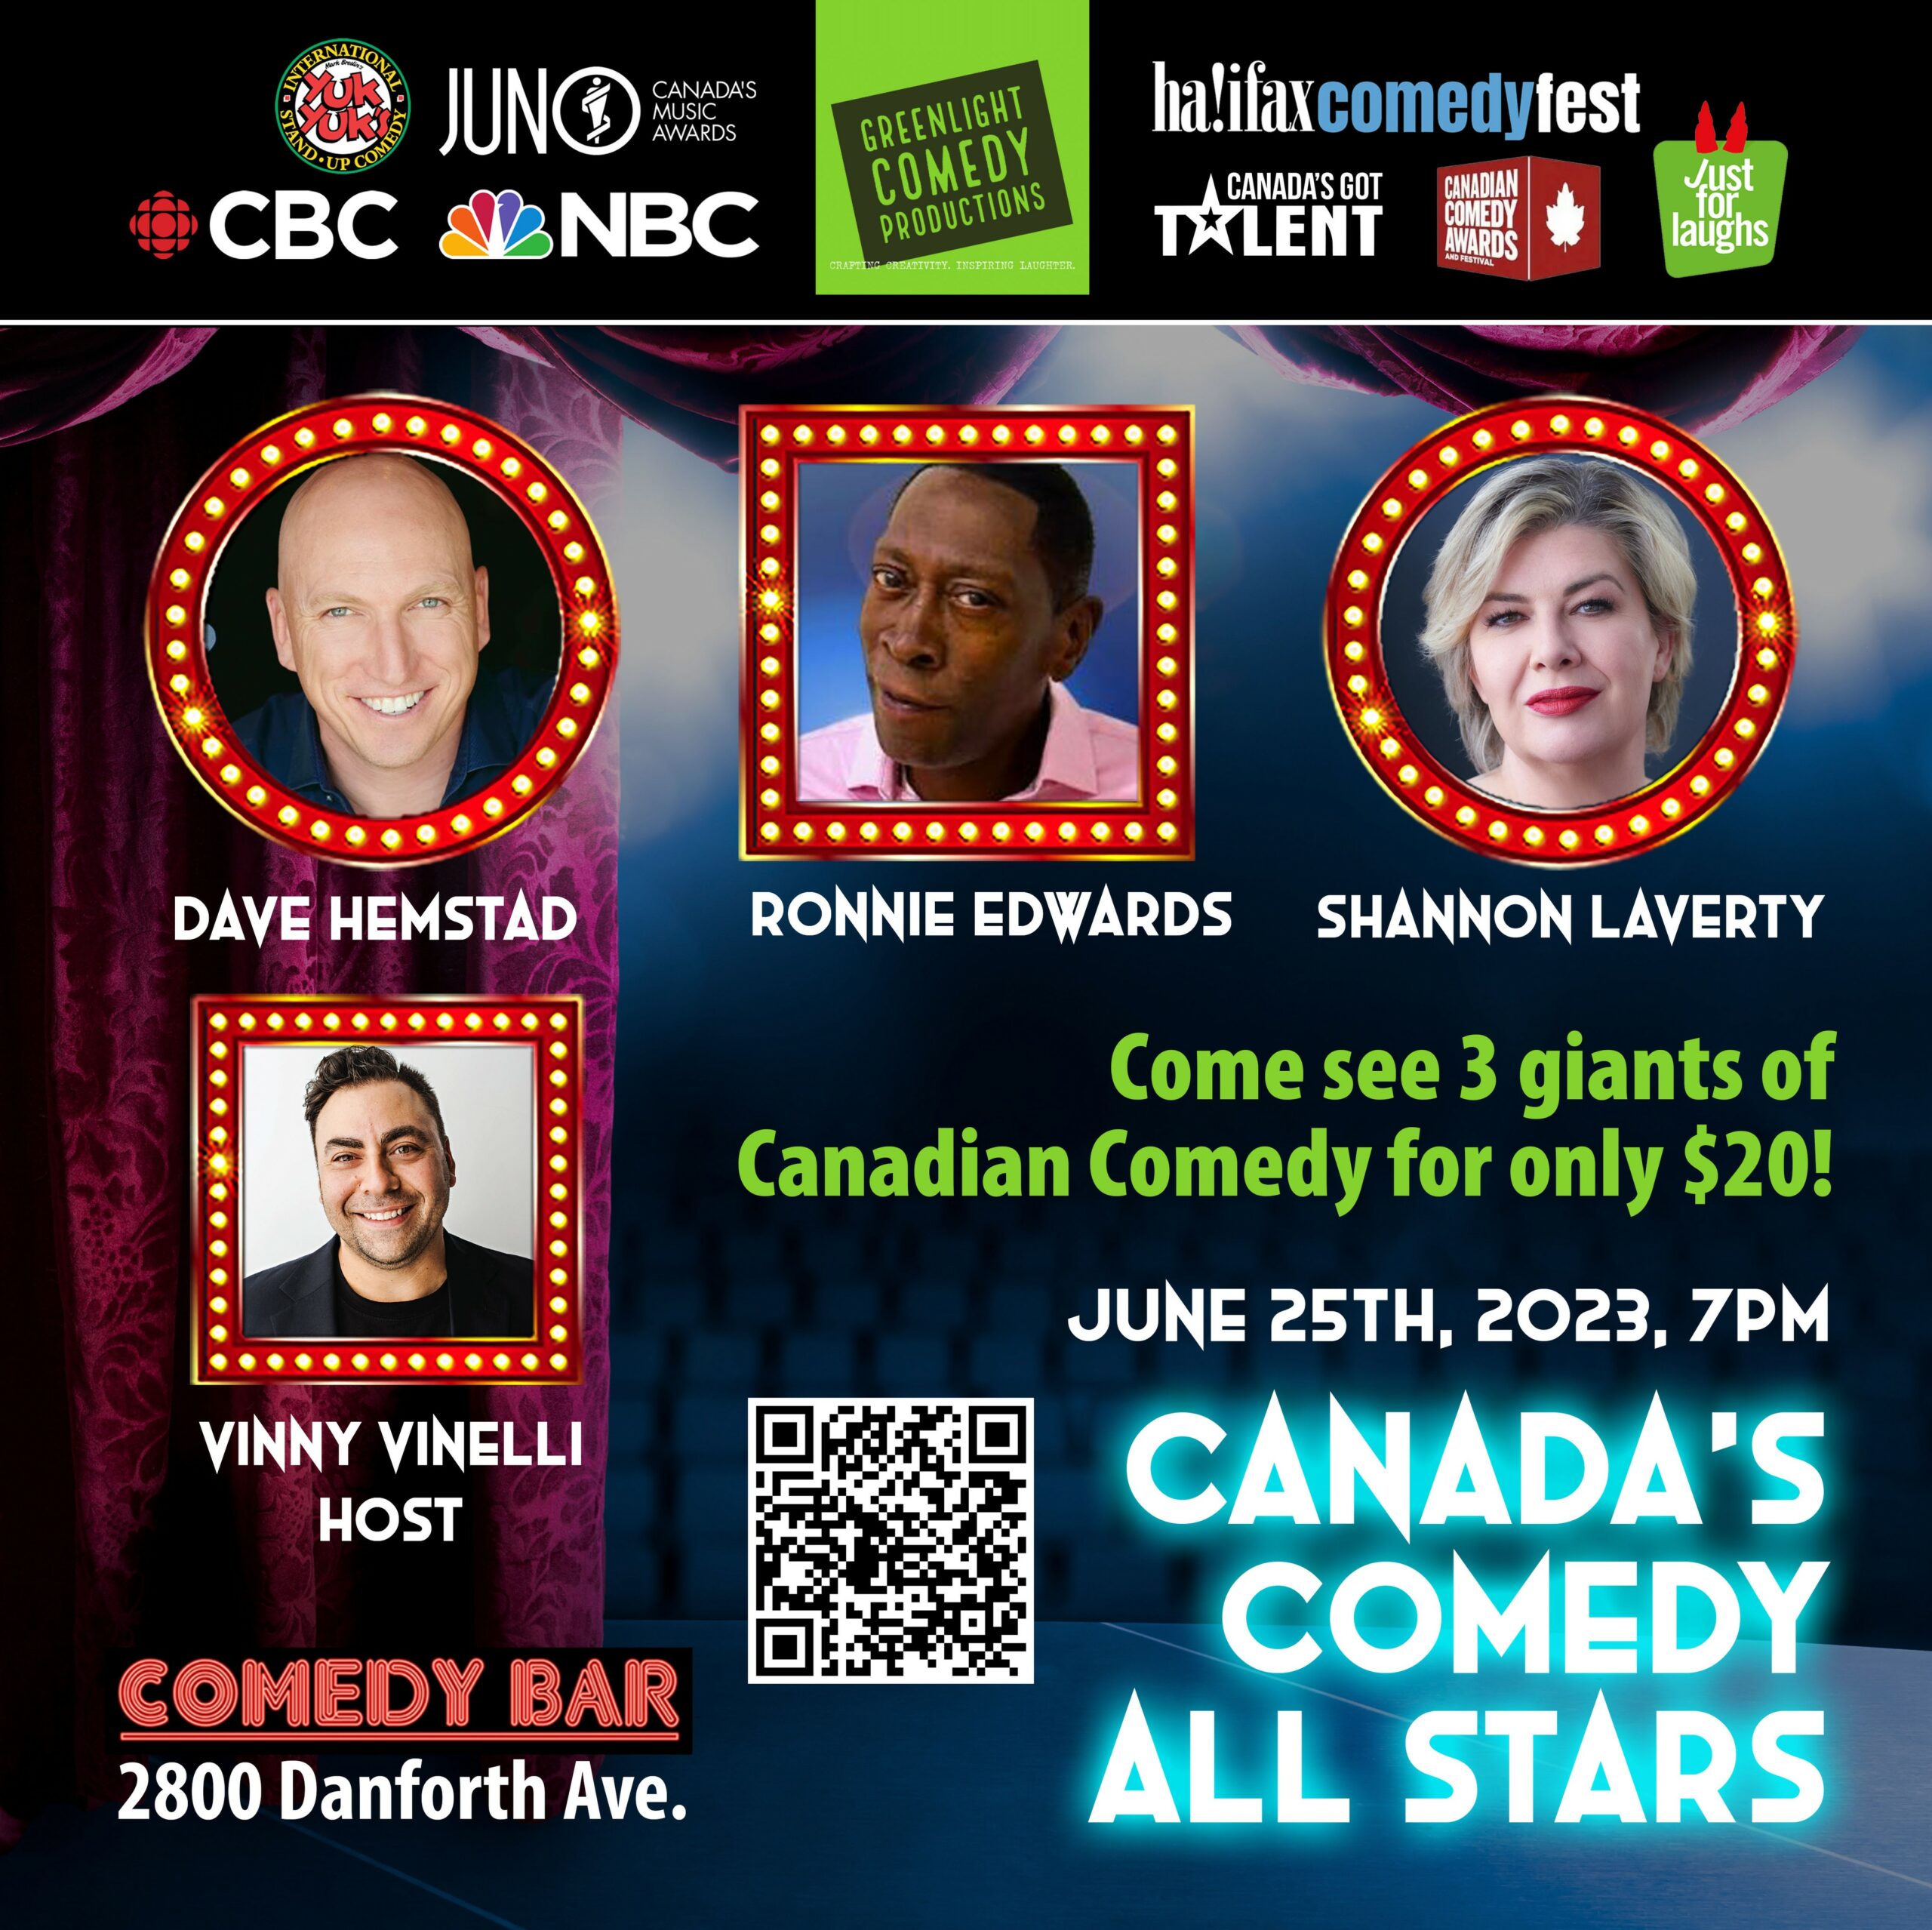 Canada's Comedy All Stars Jun 25, 2023, Greenlight Comedy Productions